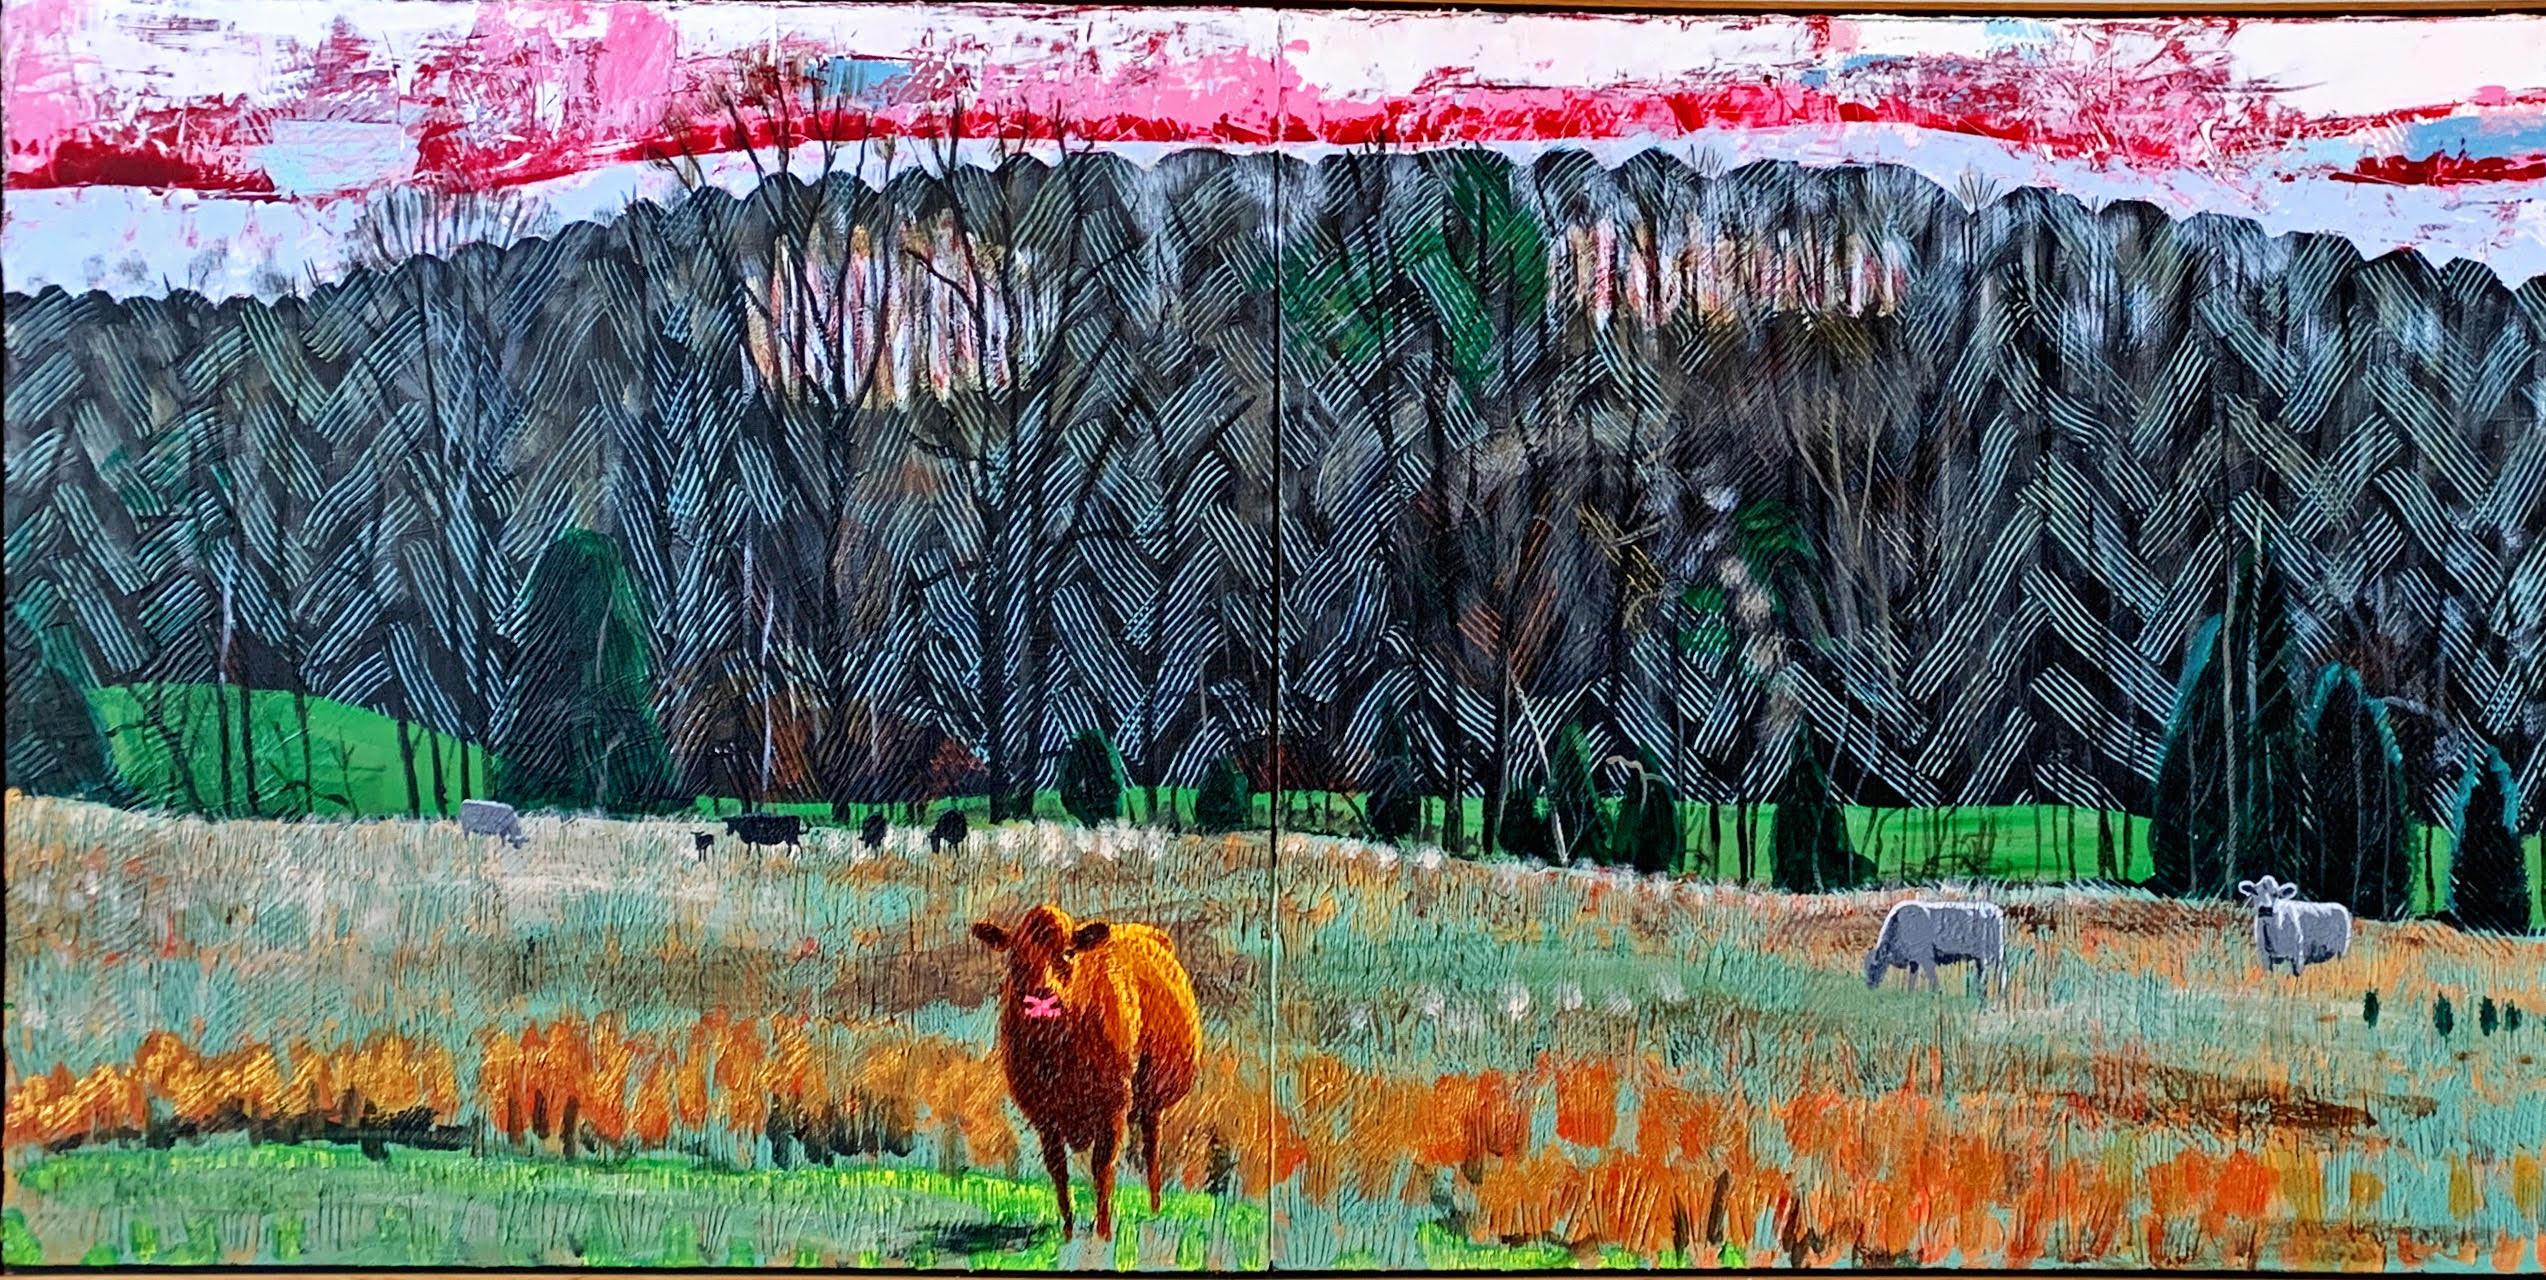 Cows in Hayfield Diptych II - 35x71in